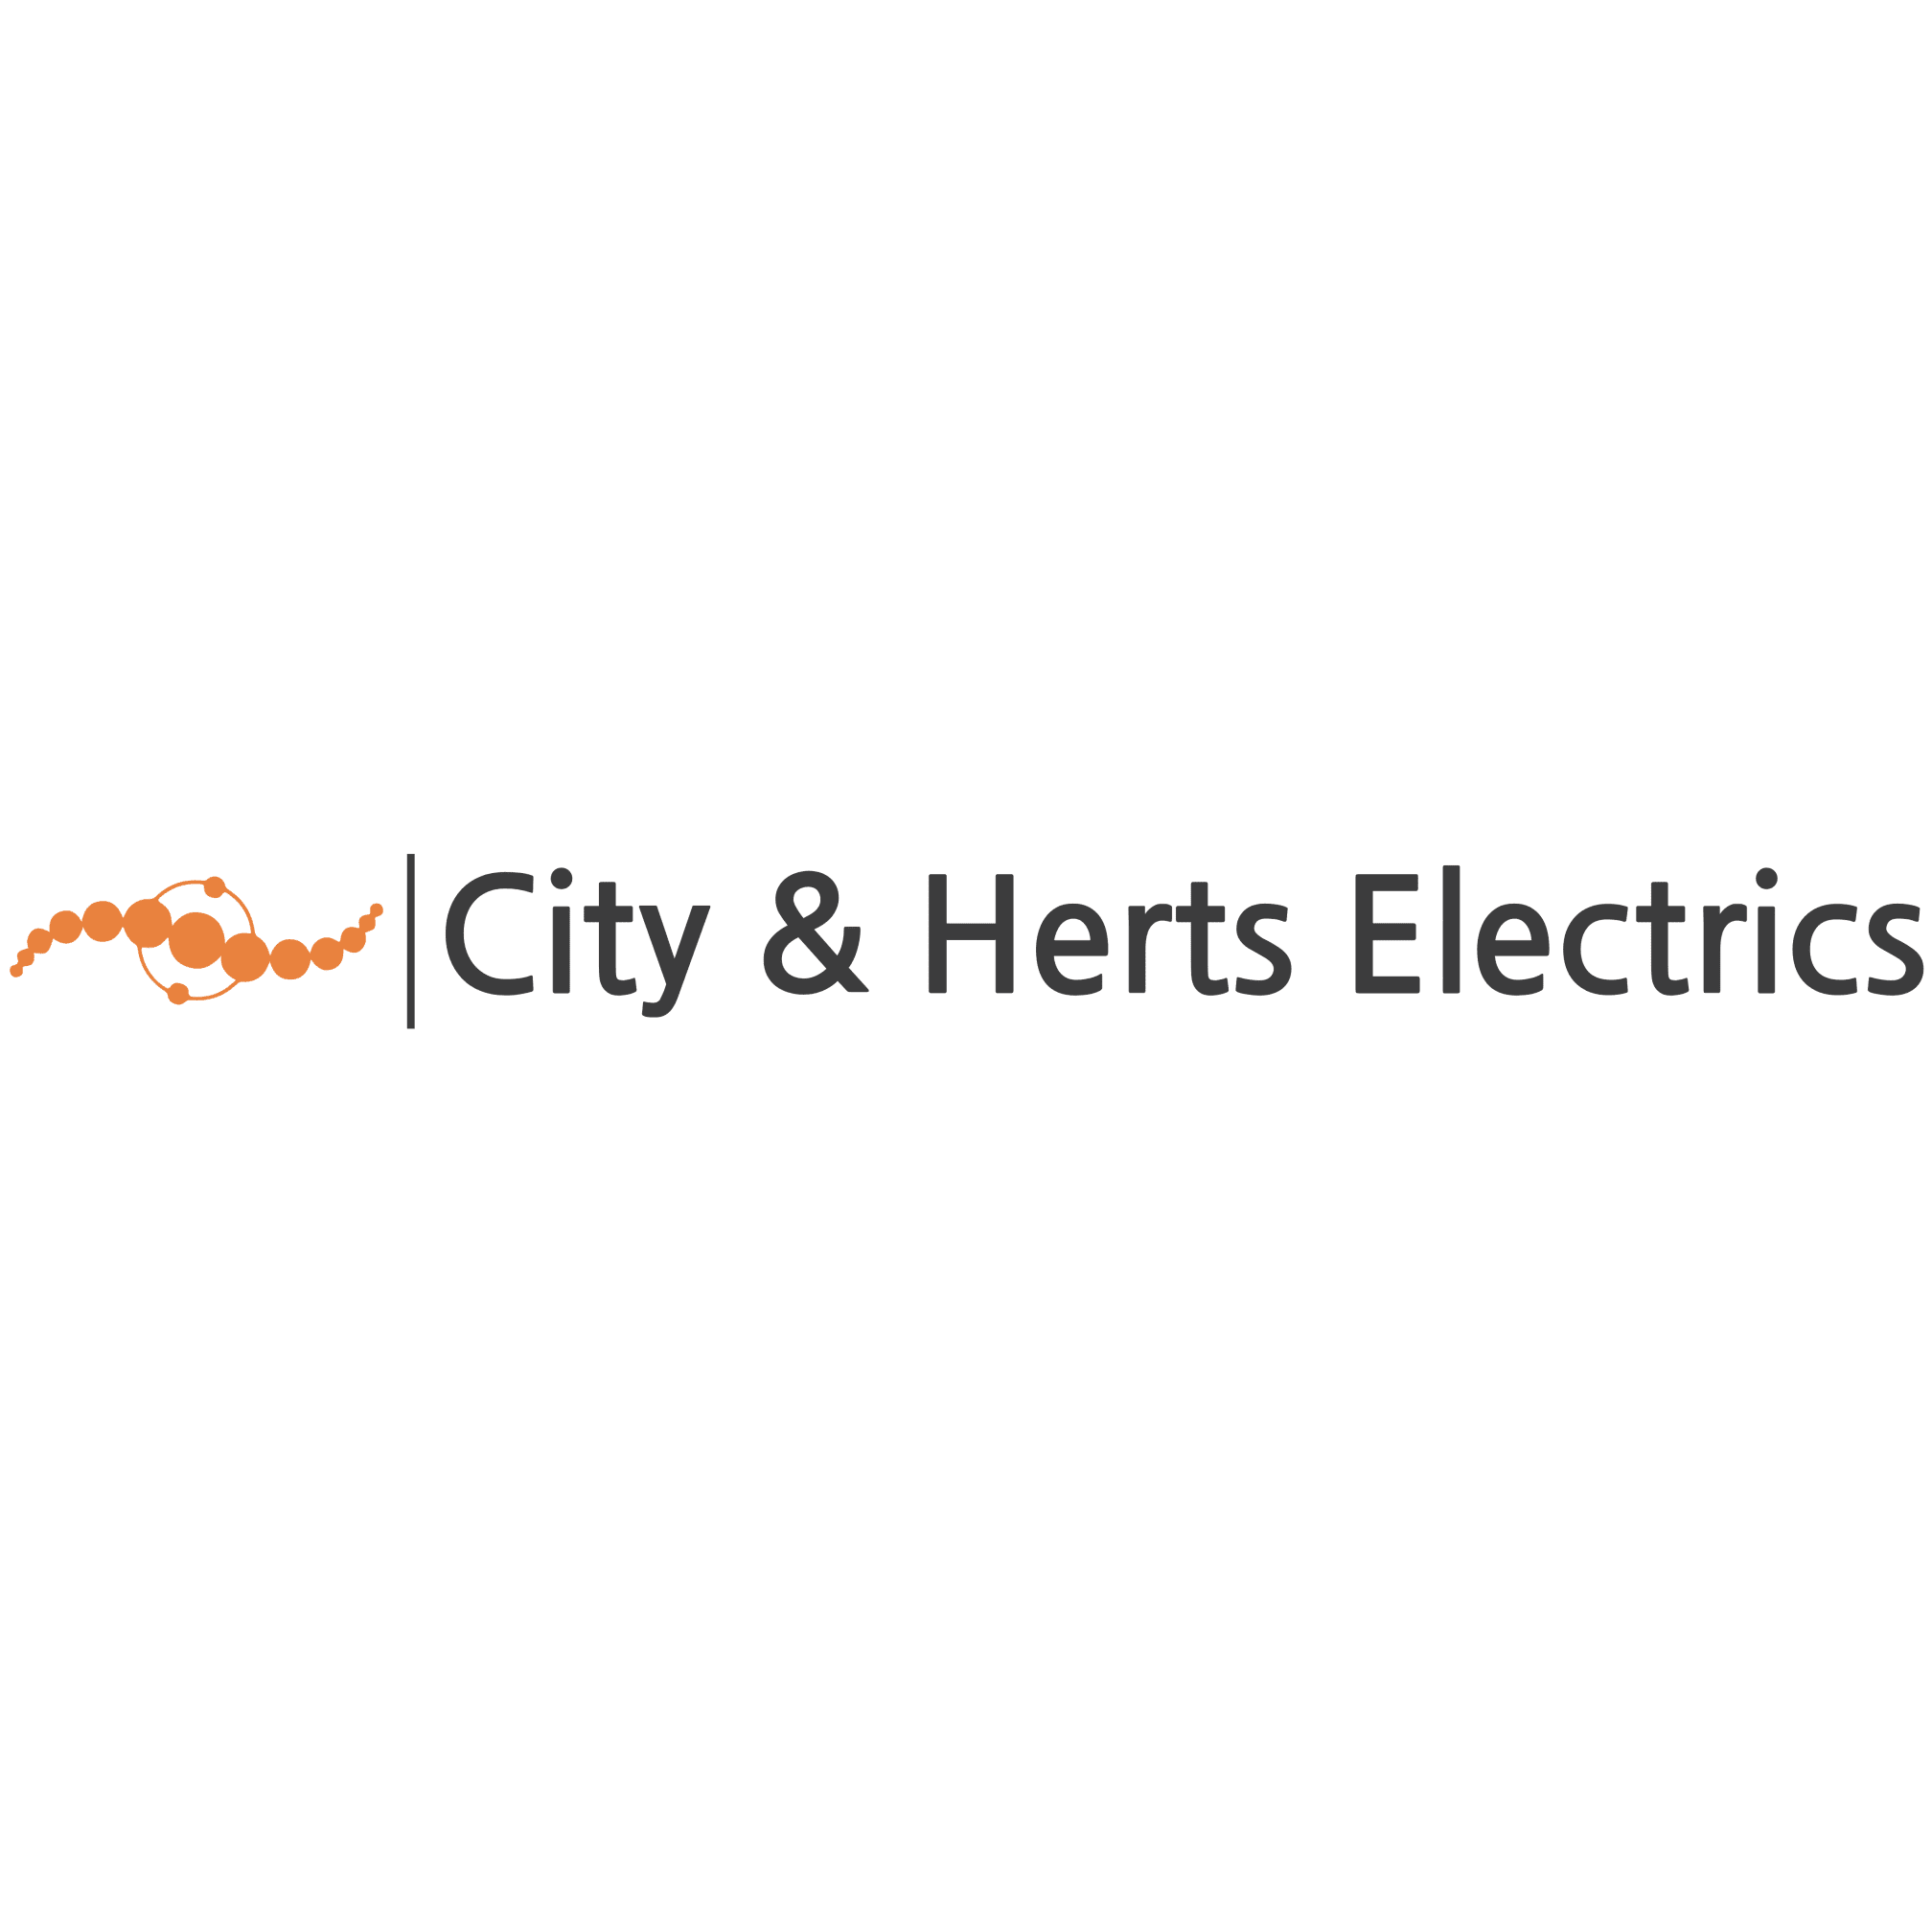 City & Herts Electrics - Hatfield, Hertfordshire AL10 9LD - 01707 929119 | ShowMeLocal.com